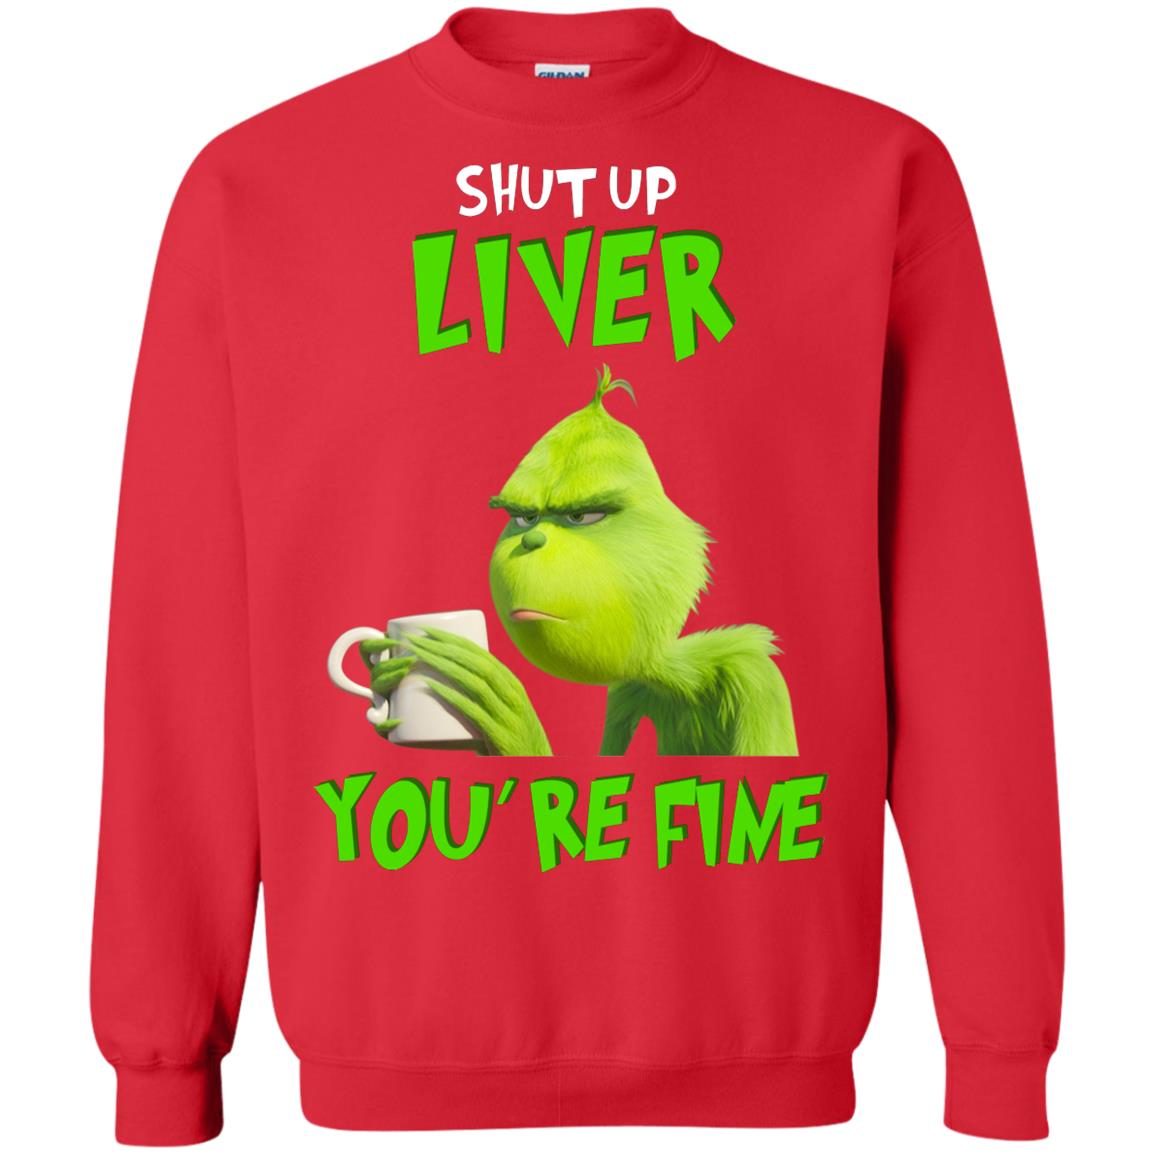 Grinch Shut Up Liver You’re Fine shirt